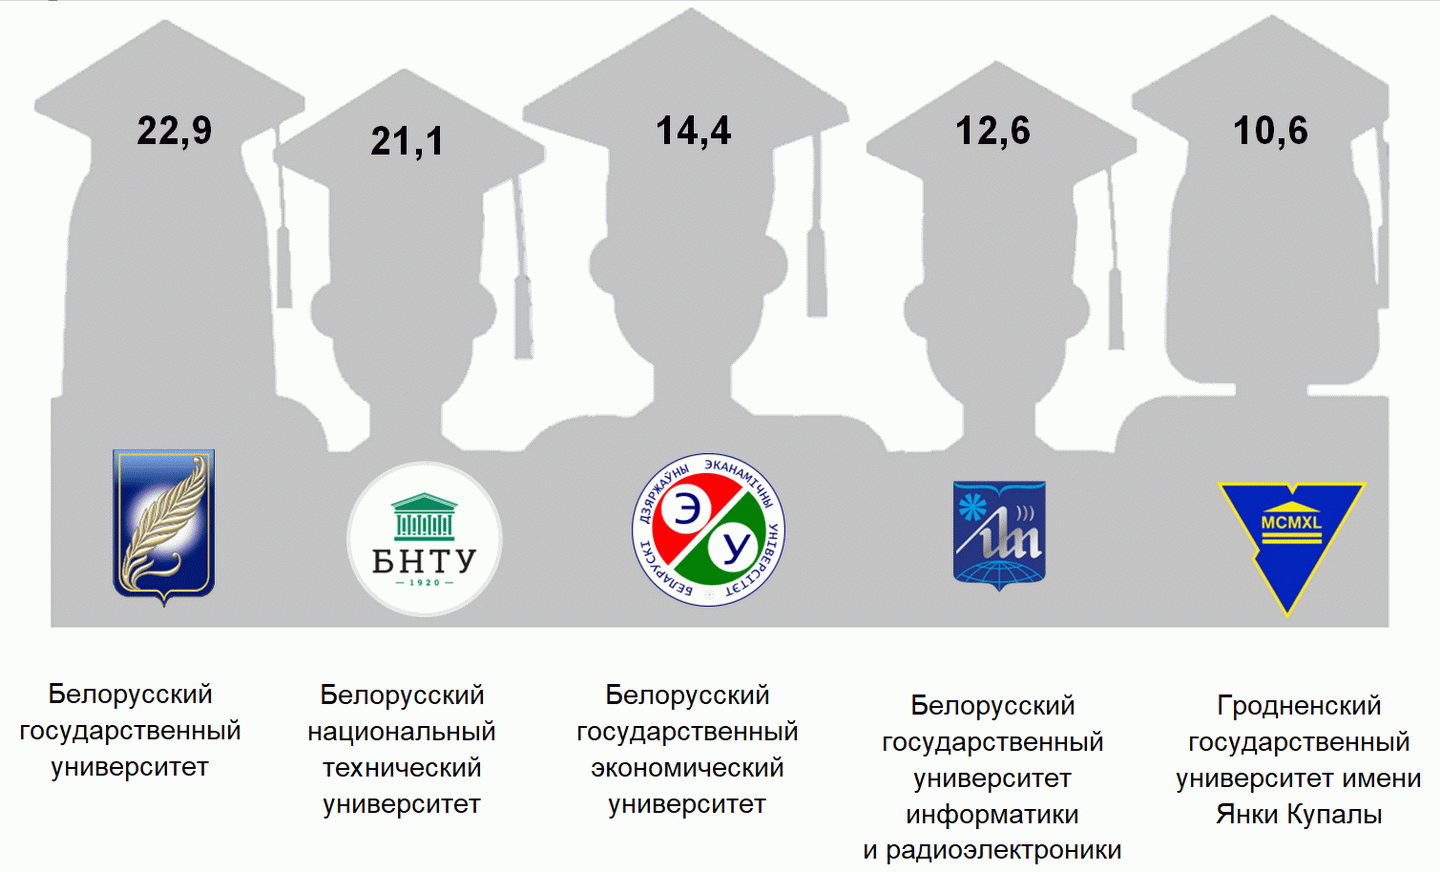 Тысяч студентов/belstat.gov.by